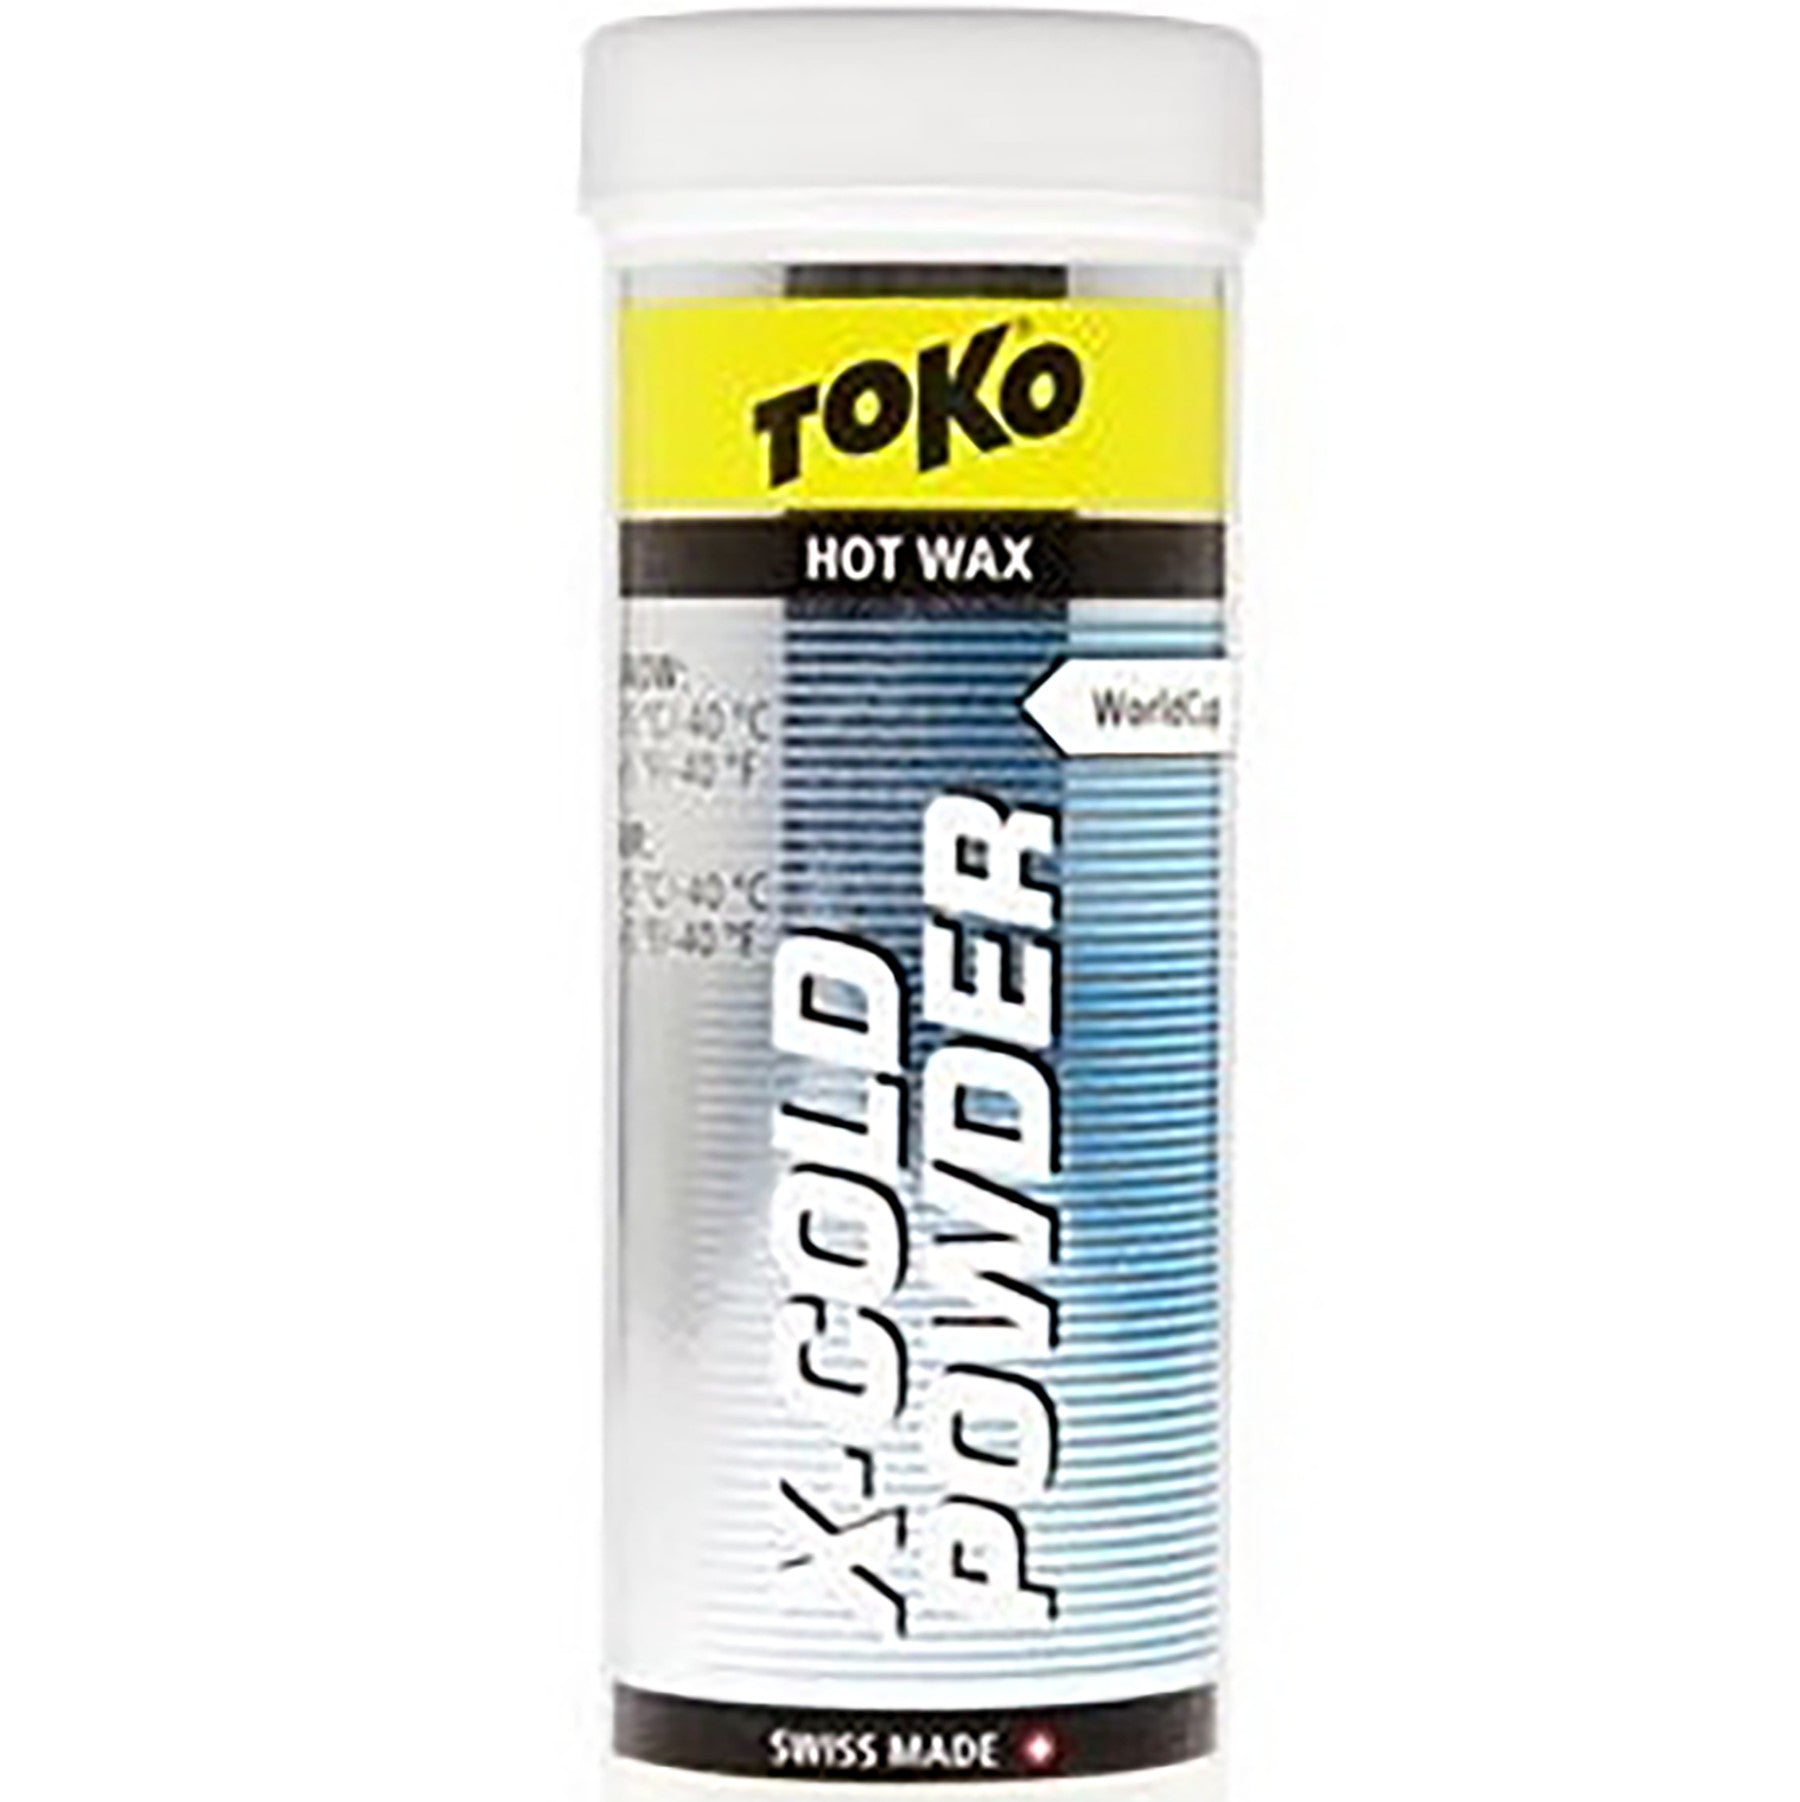 Toko X-Cold Powder 50g